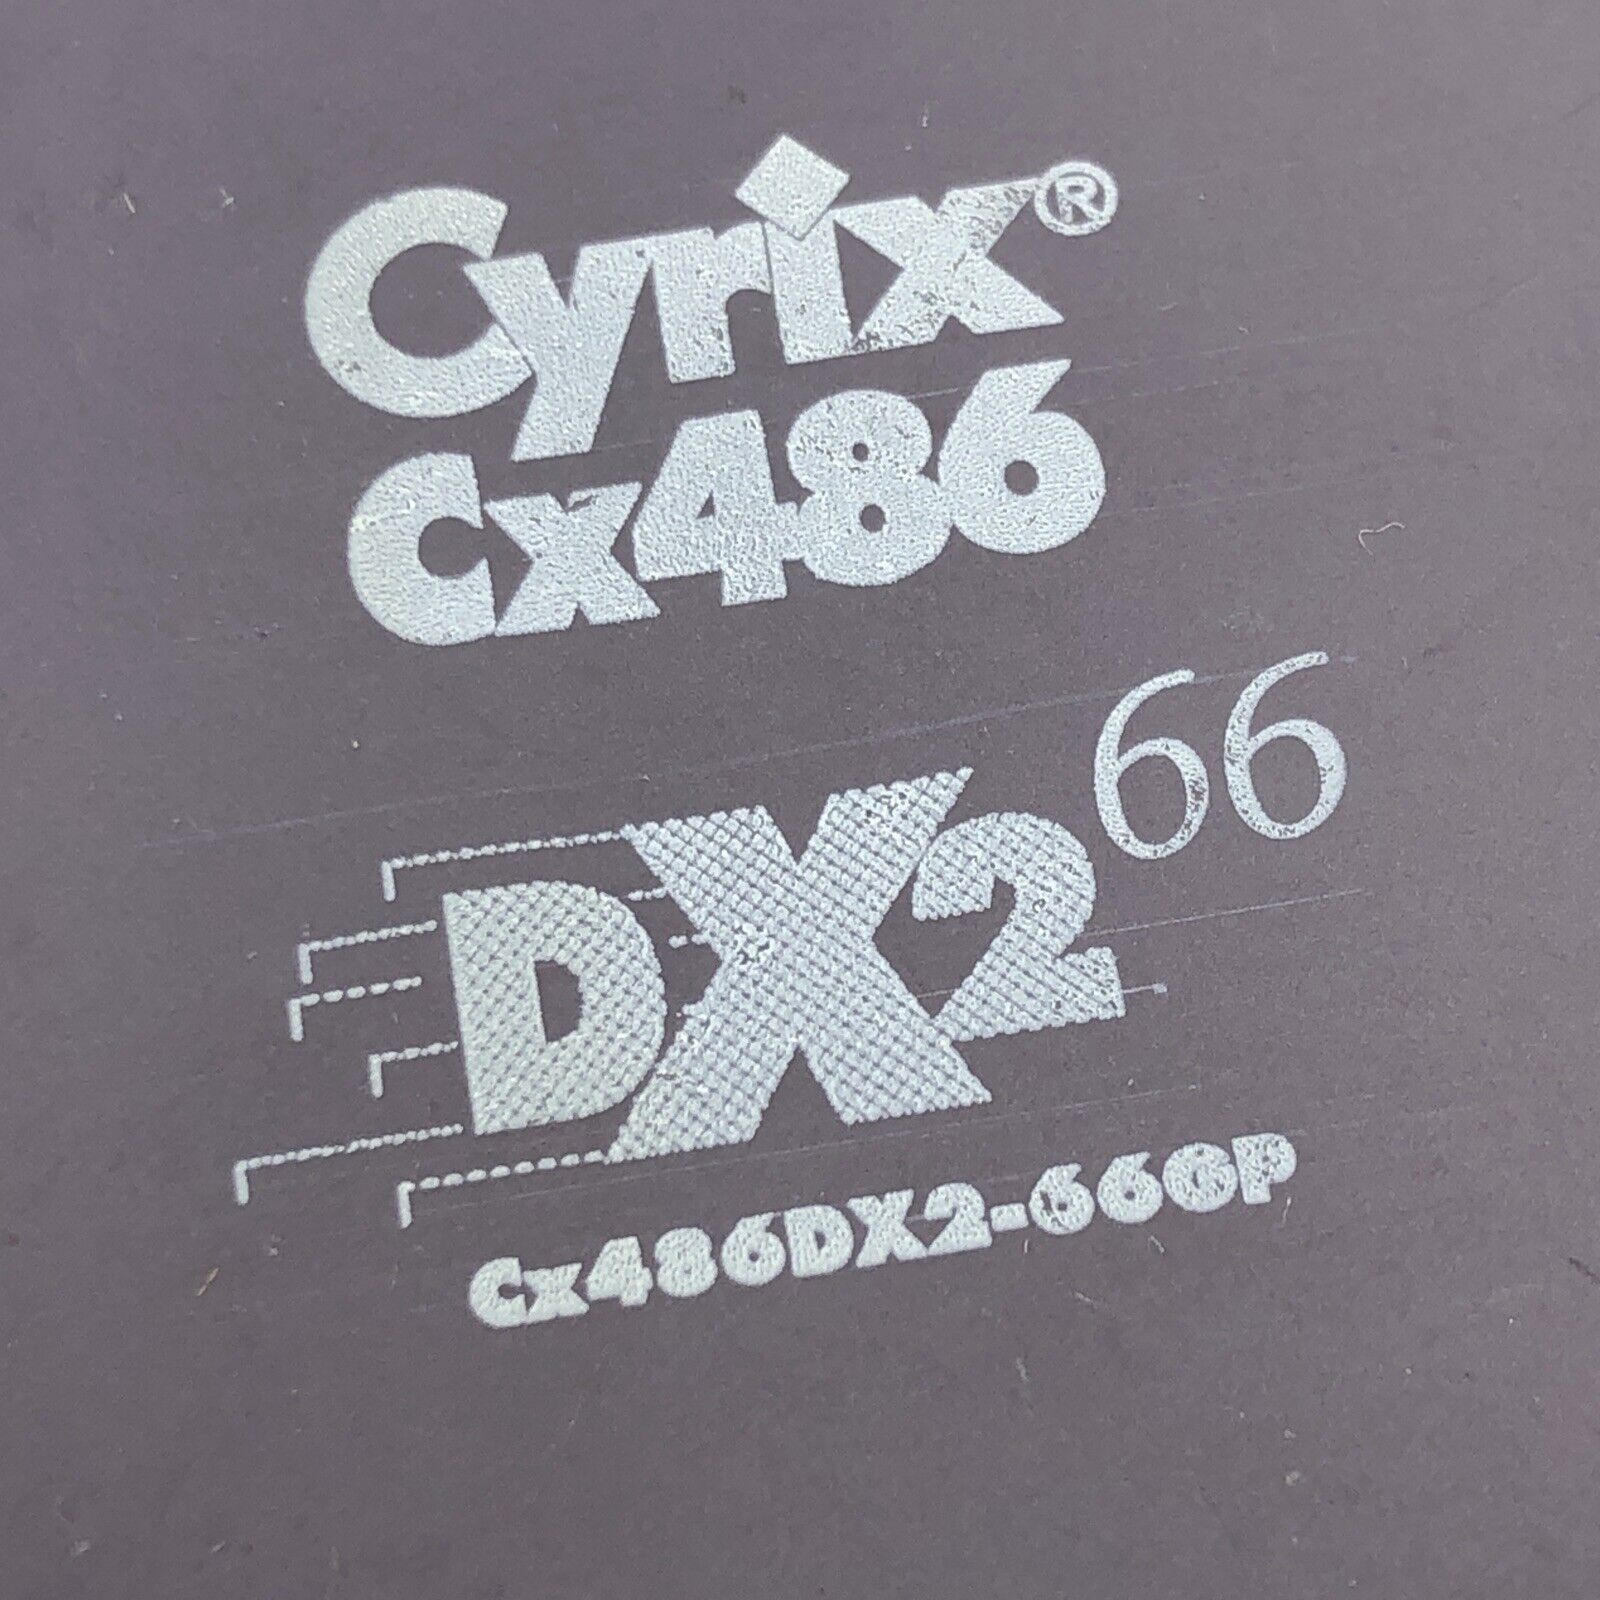 Cyrix Cx486 DX2 66-MHz Cx486DX2-66GP CPU Ceramic Processor 1993 Rare Vintage